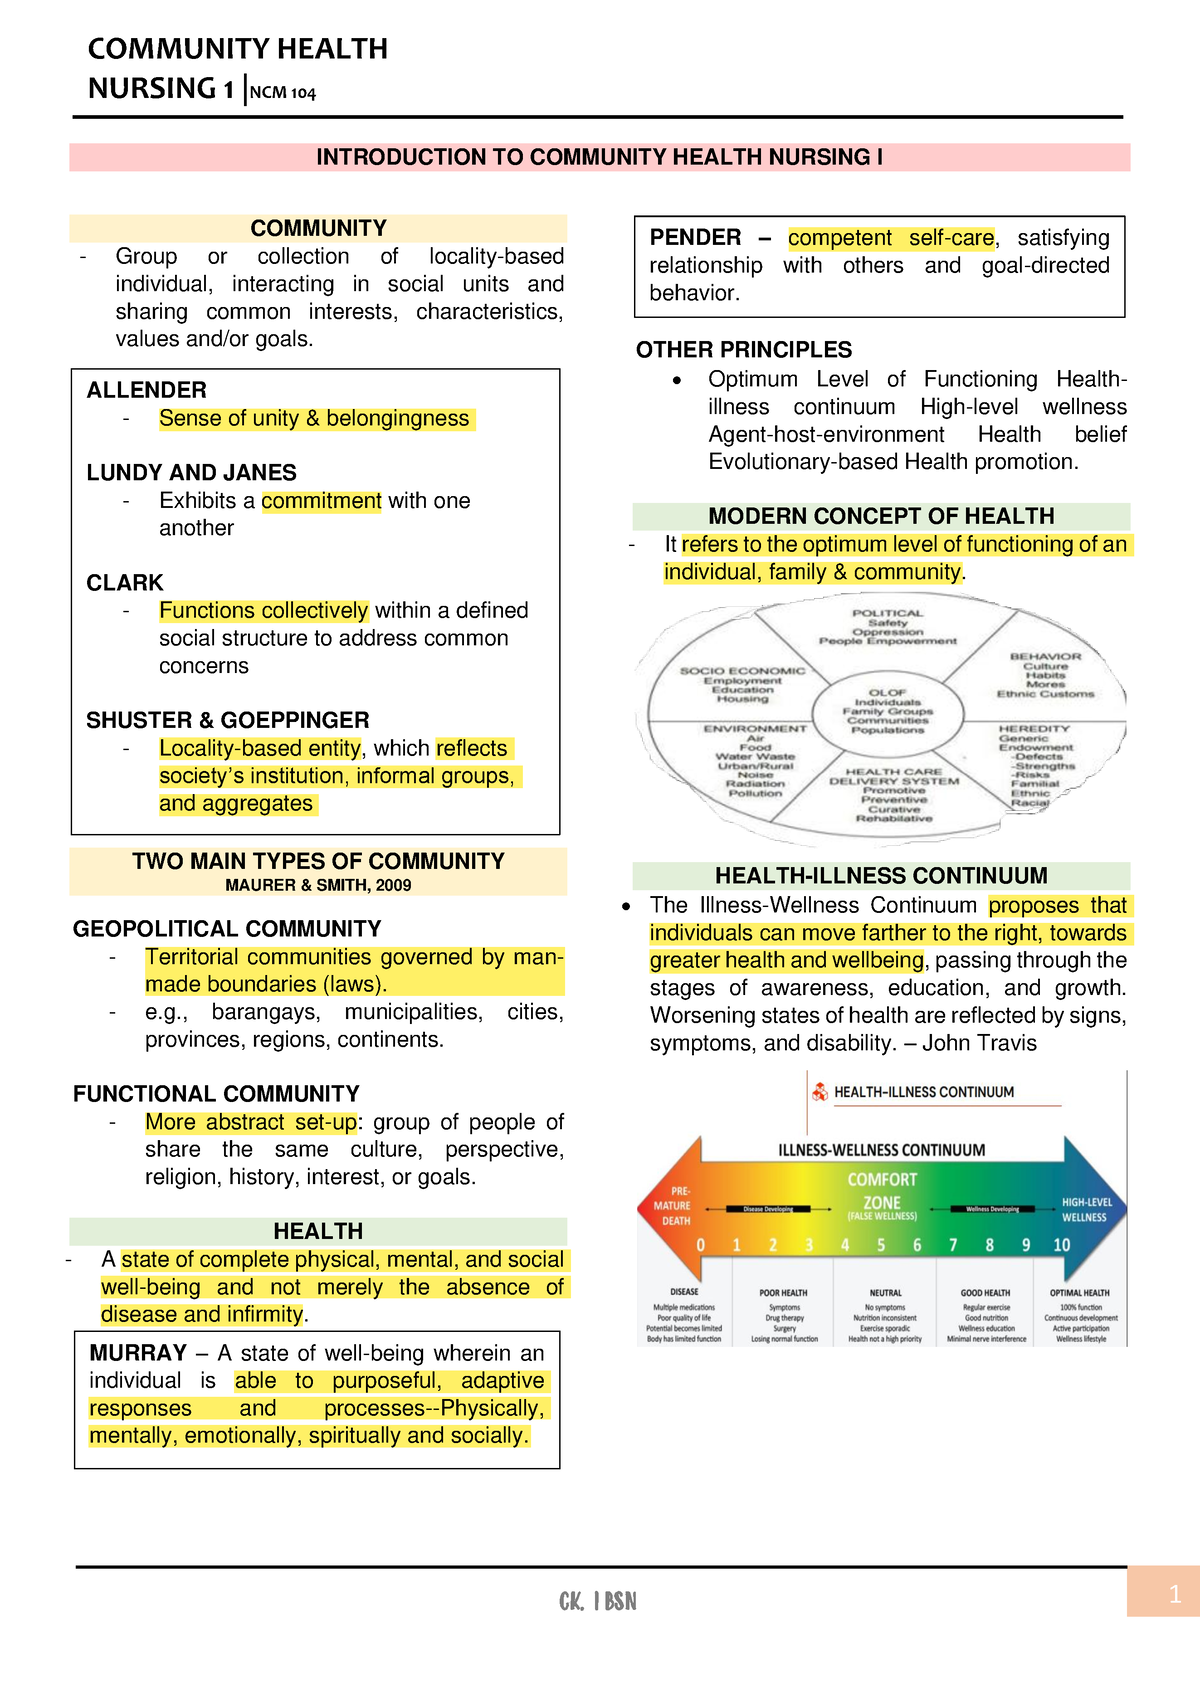 Pdfcoffee - Health Education - [PDF] Nurse as Educator: Principles of  Teaching and Learning for - Studocu